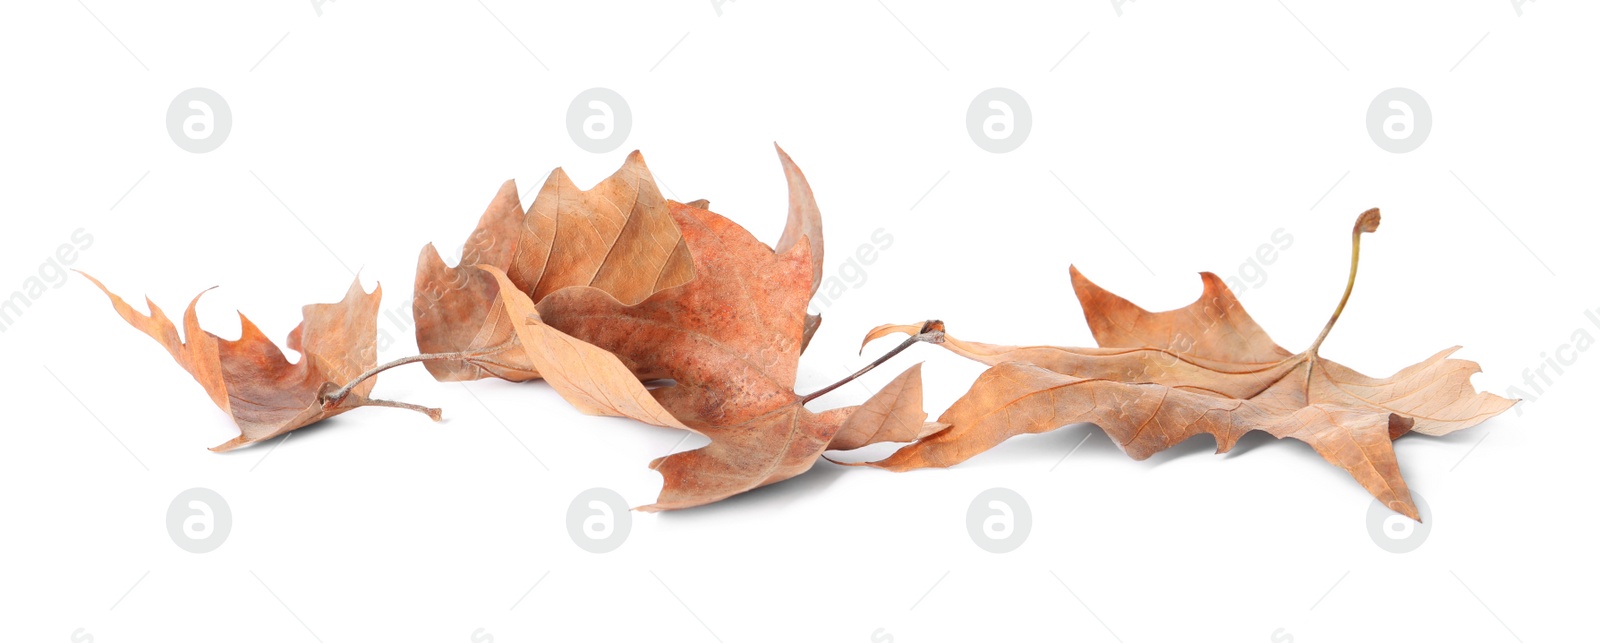 Photo of Dry leaves on white background. Autumn season